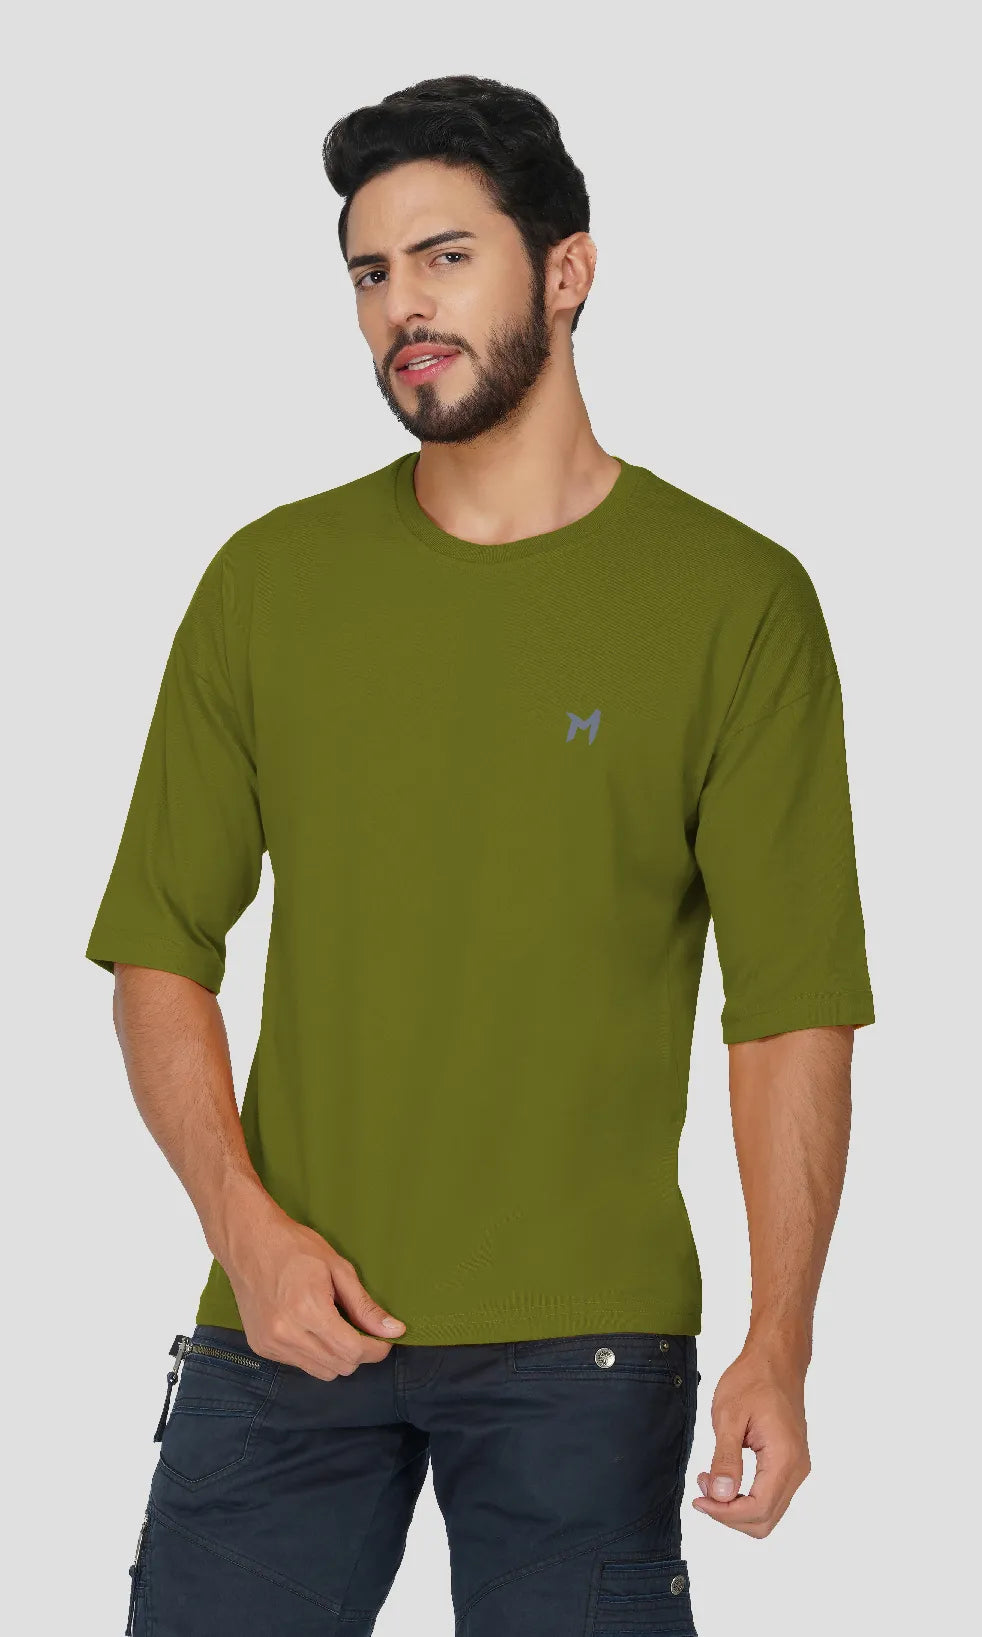 Mebadass Cotton Men's OverSized/Baggy Dropshoulder T-shirts - Olive Green